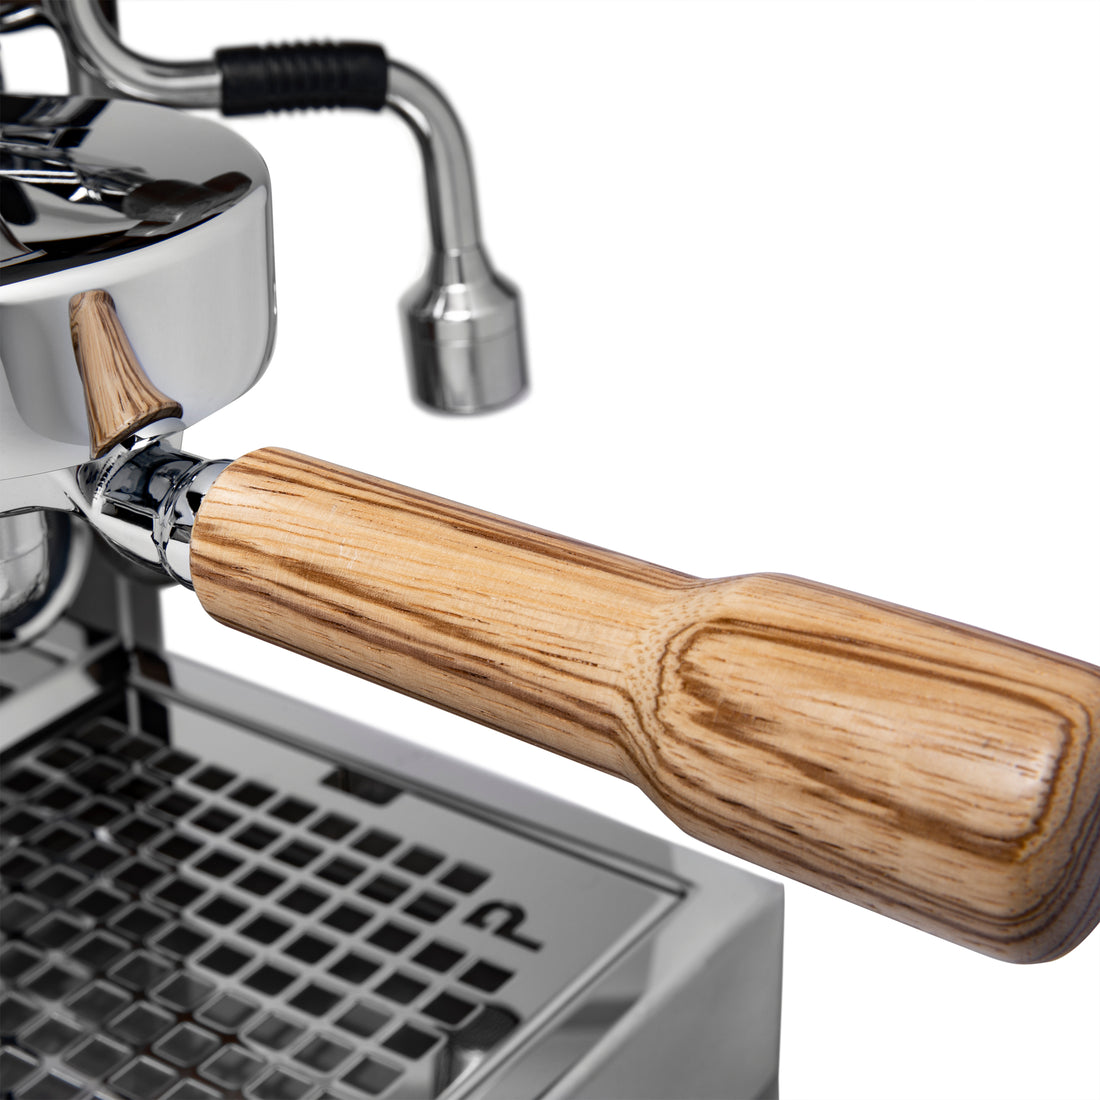 Profitec Pro 500 PID Espresso Machine with Zebra Wood Accents